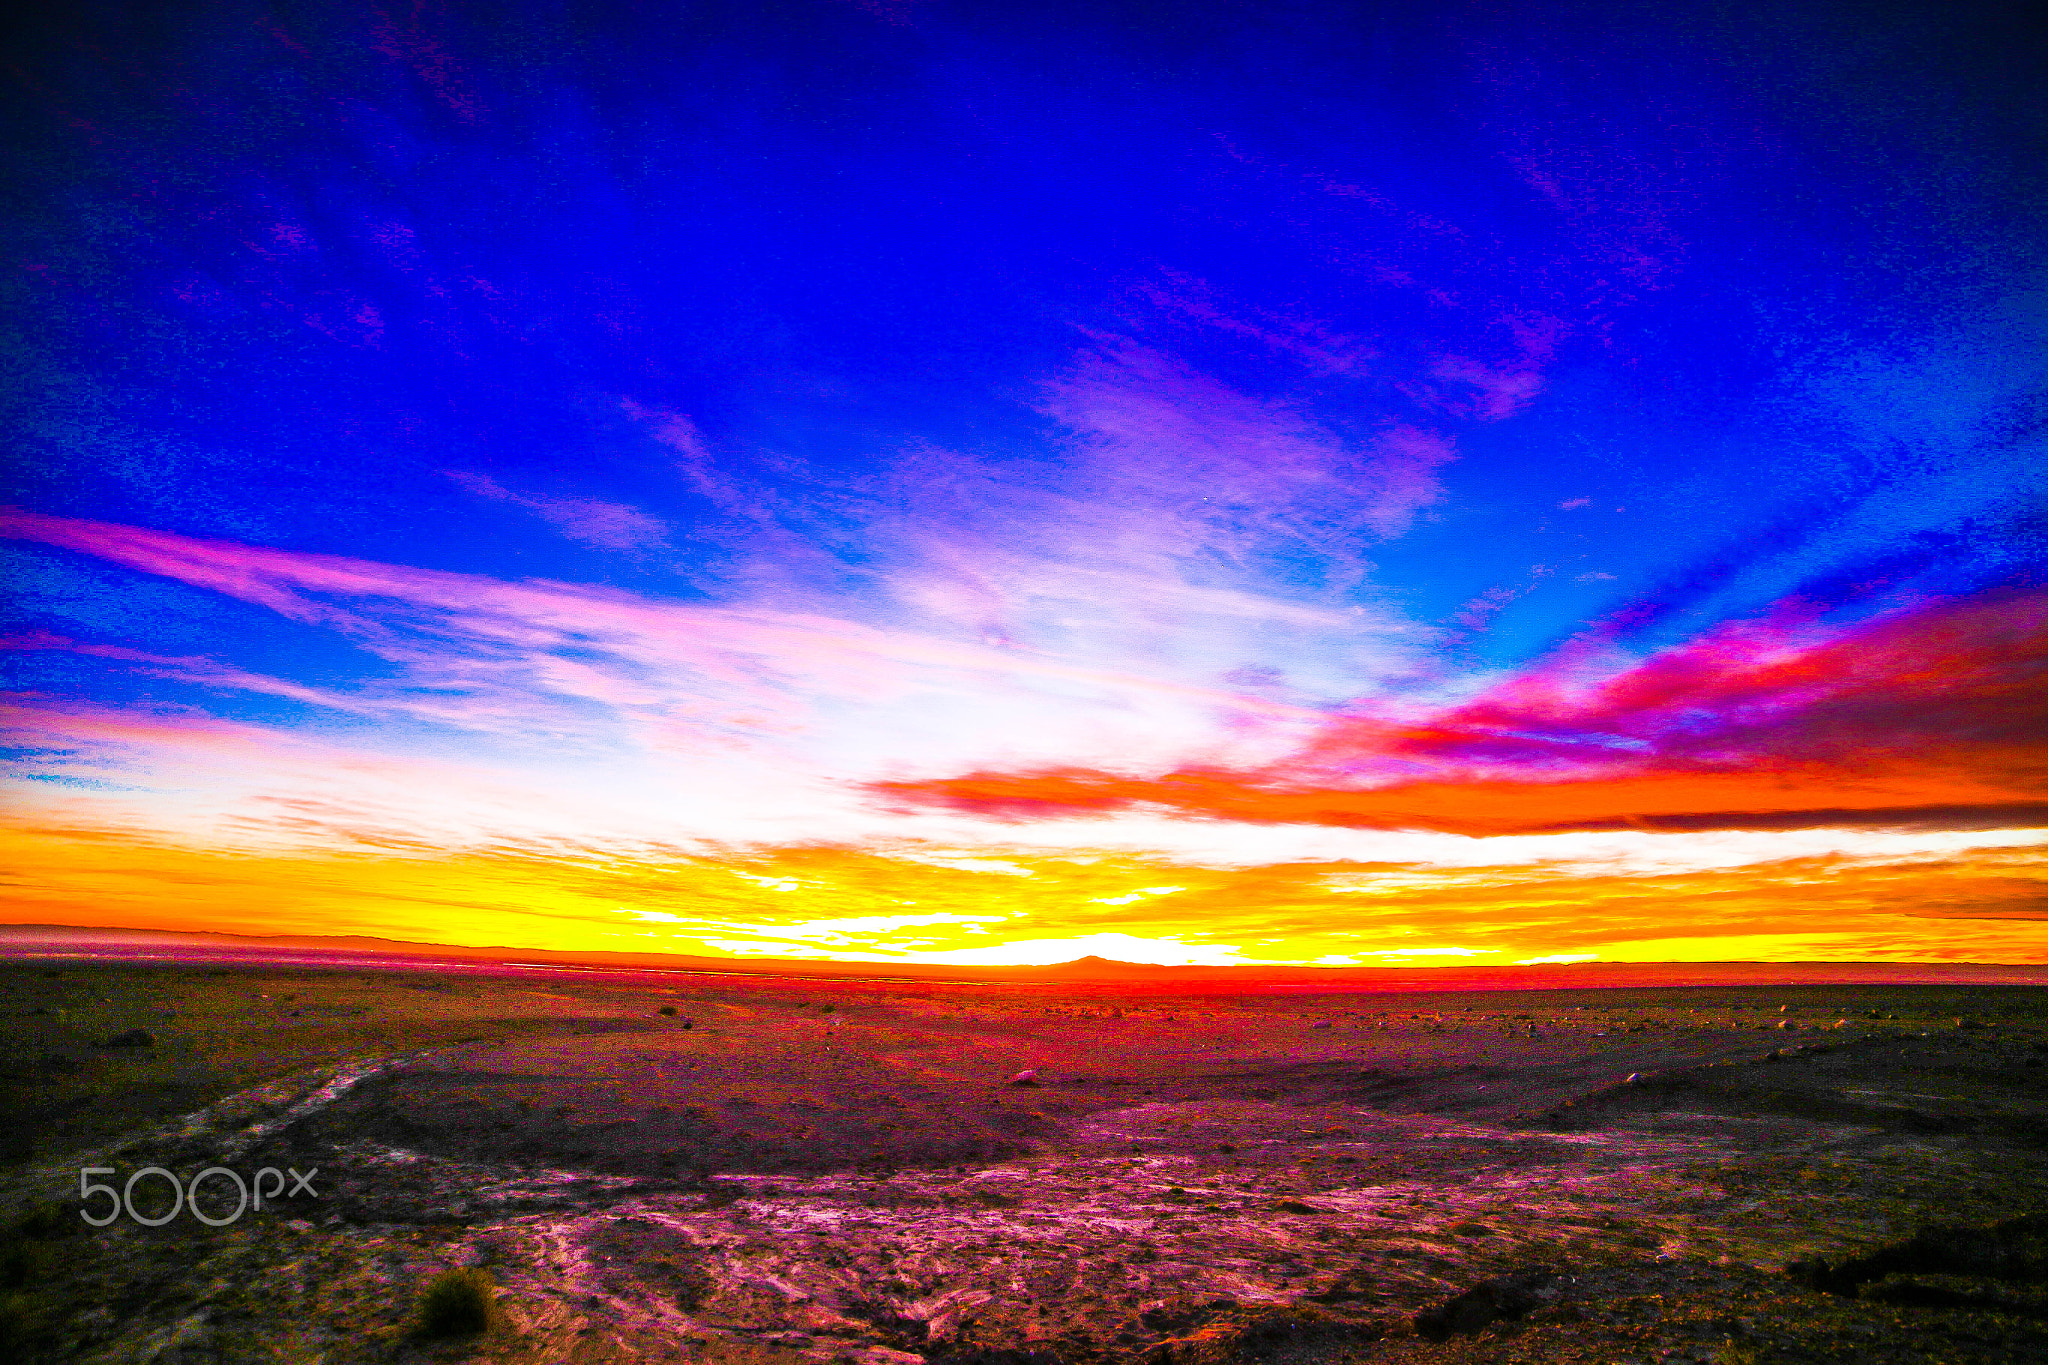 The Colorful Atacama Desert (real image)